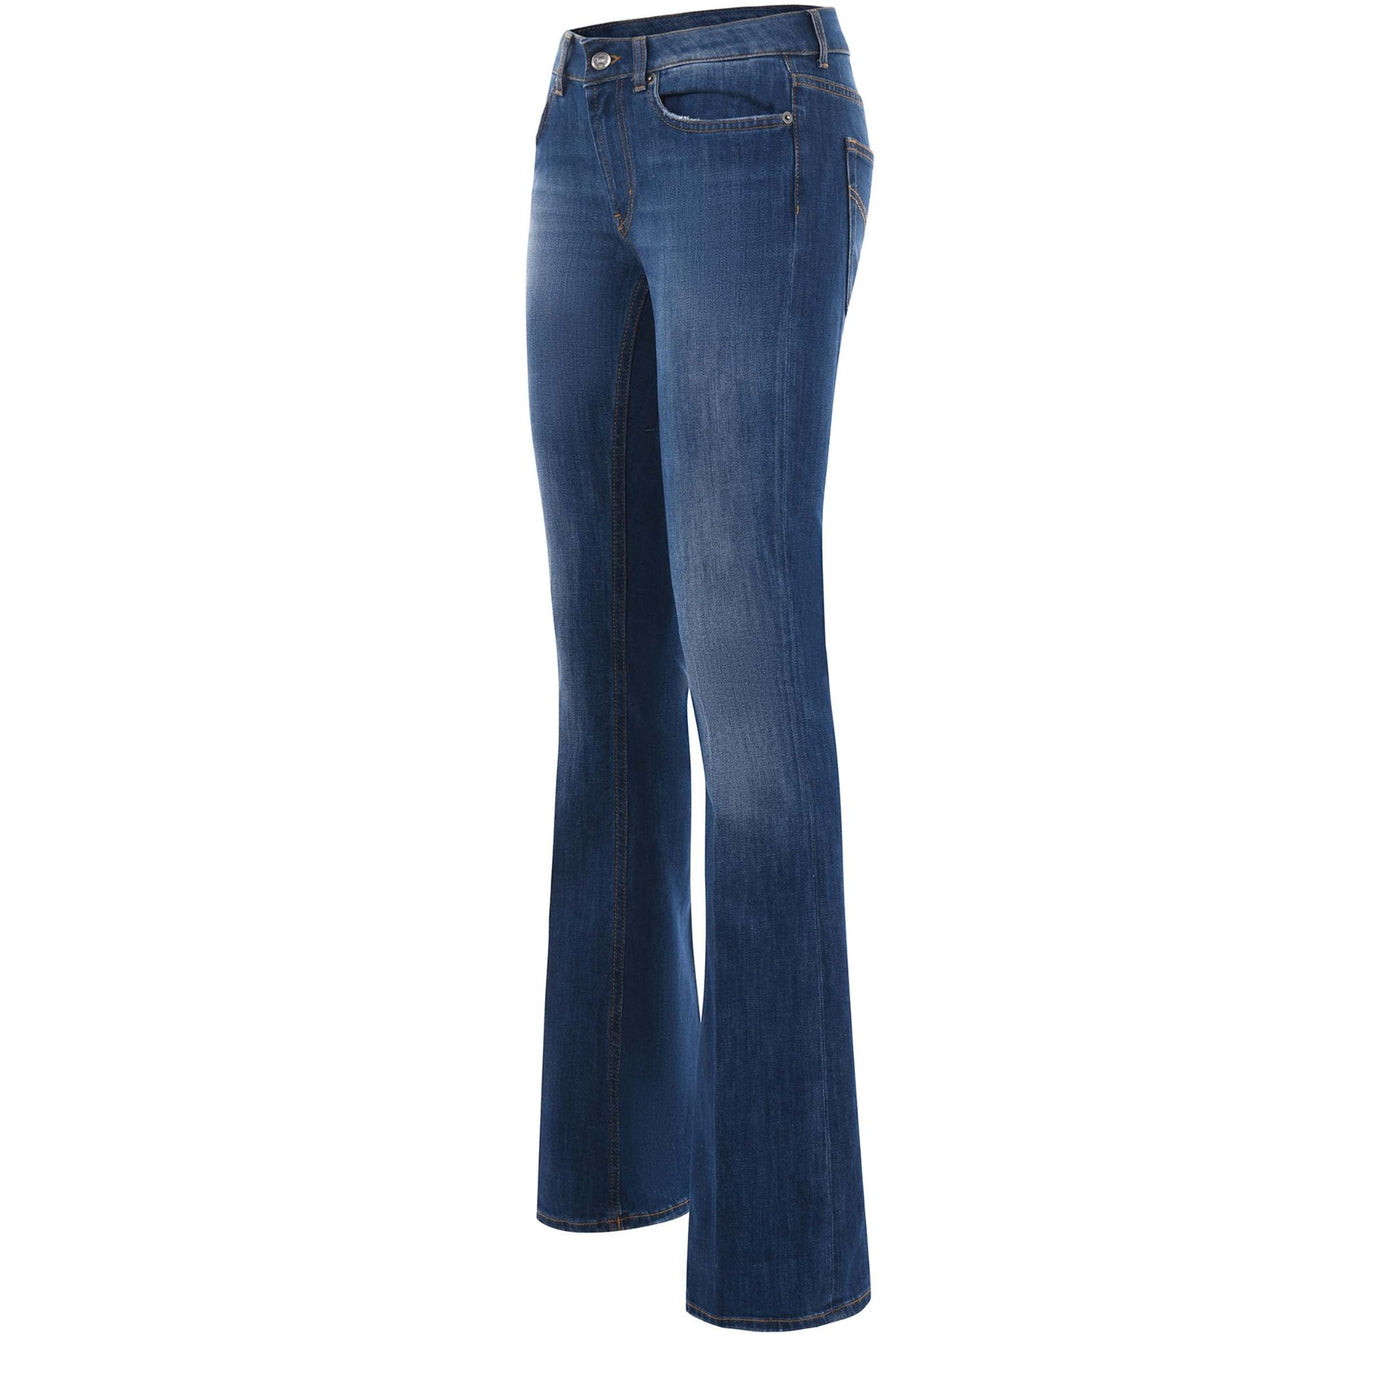 Jeans Donna a zampa effetto usured